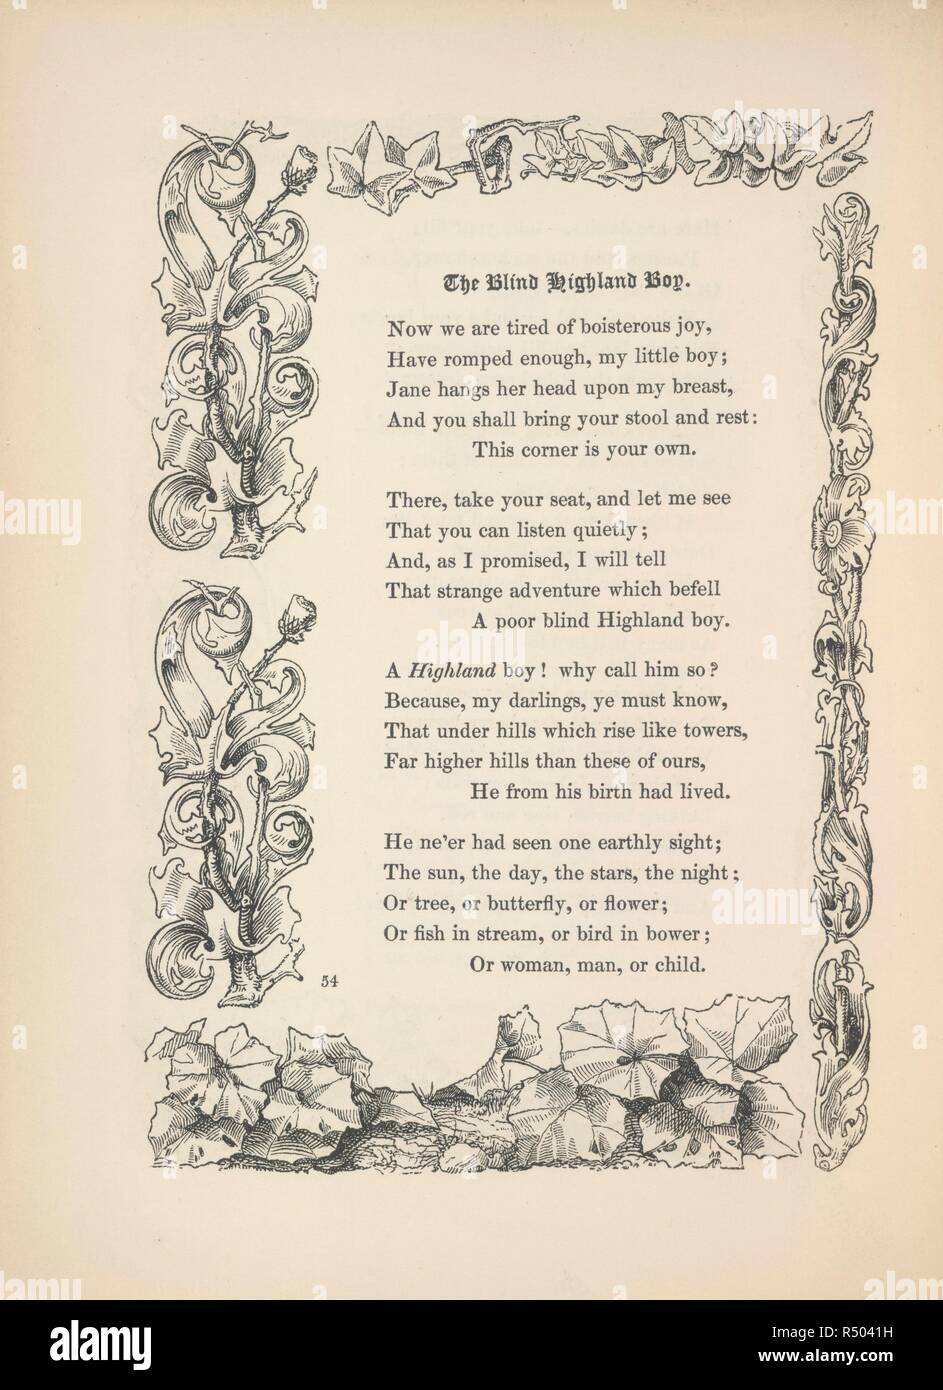 best short poems of william wordsworth